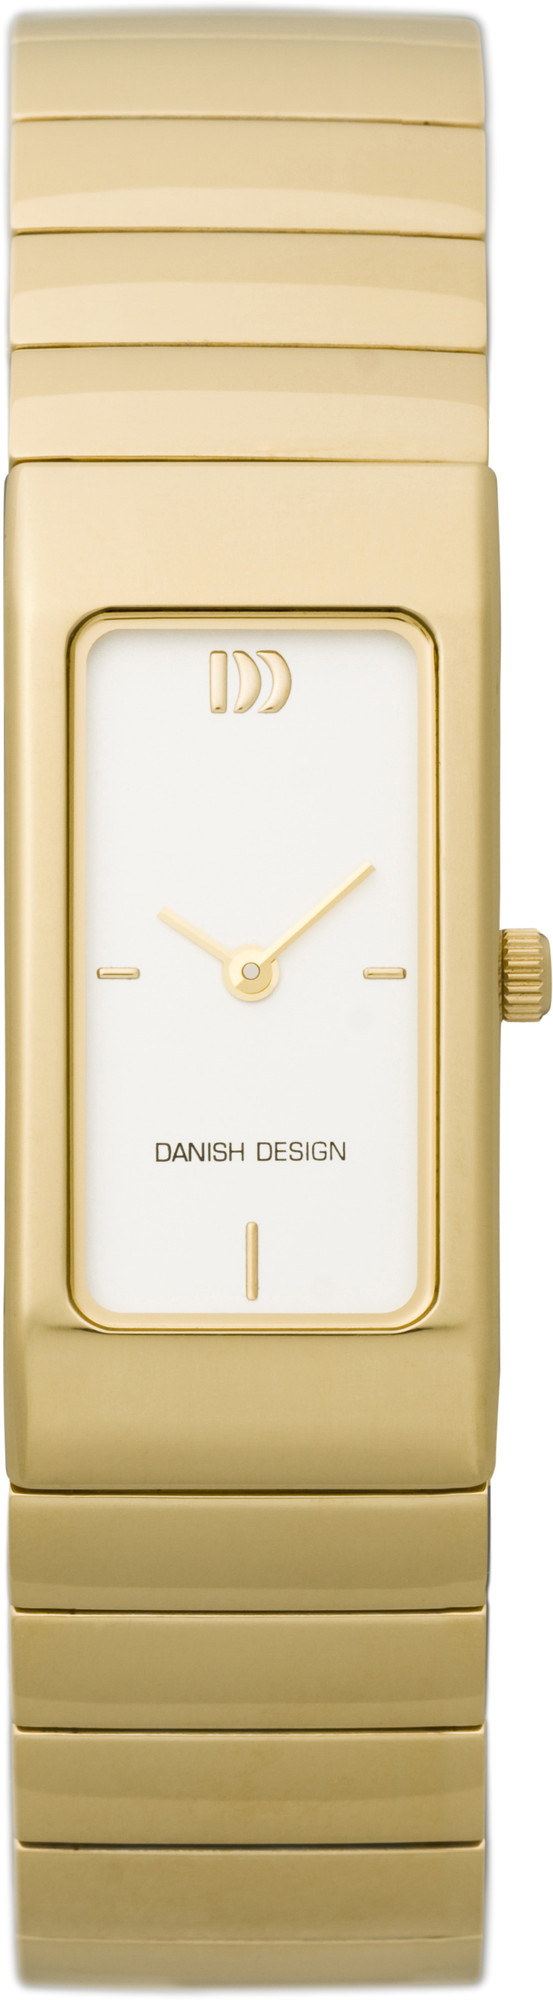 Danish Design Horloge 18/38 mm Stainless Steel IV05Q871 1